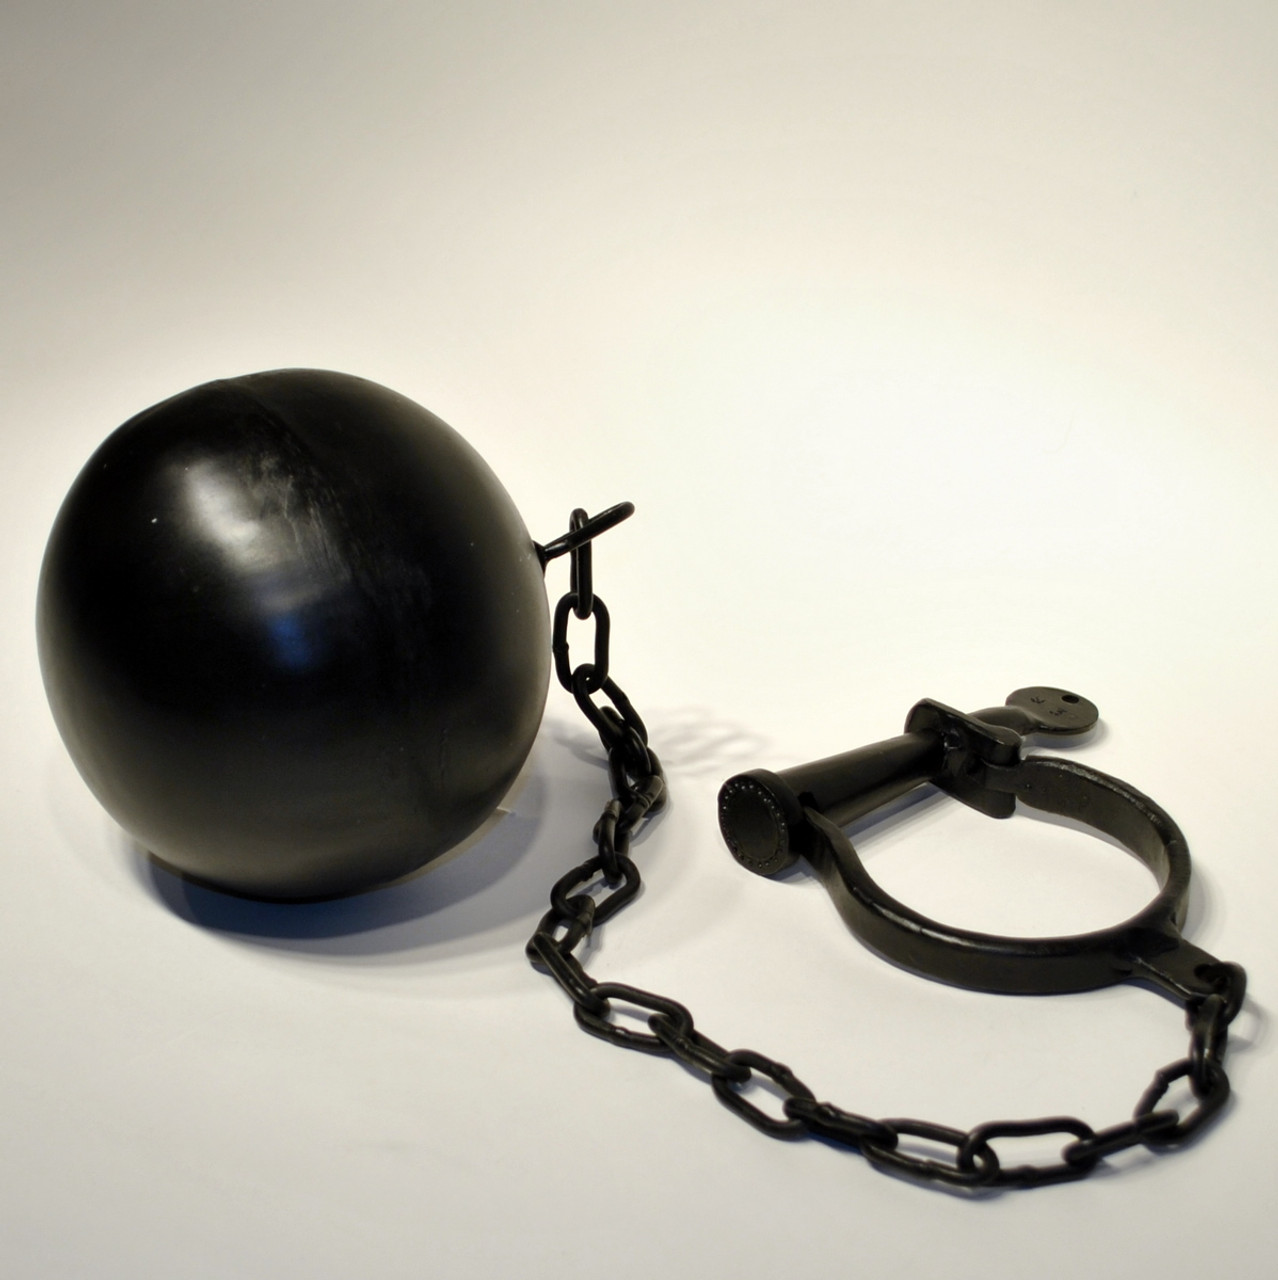 Ball and chain - Wikipedia